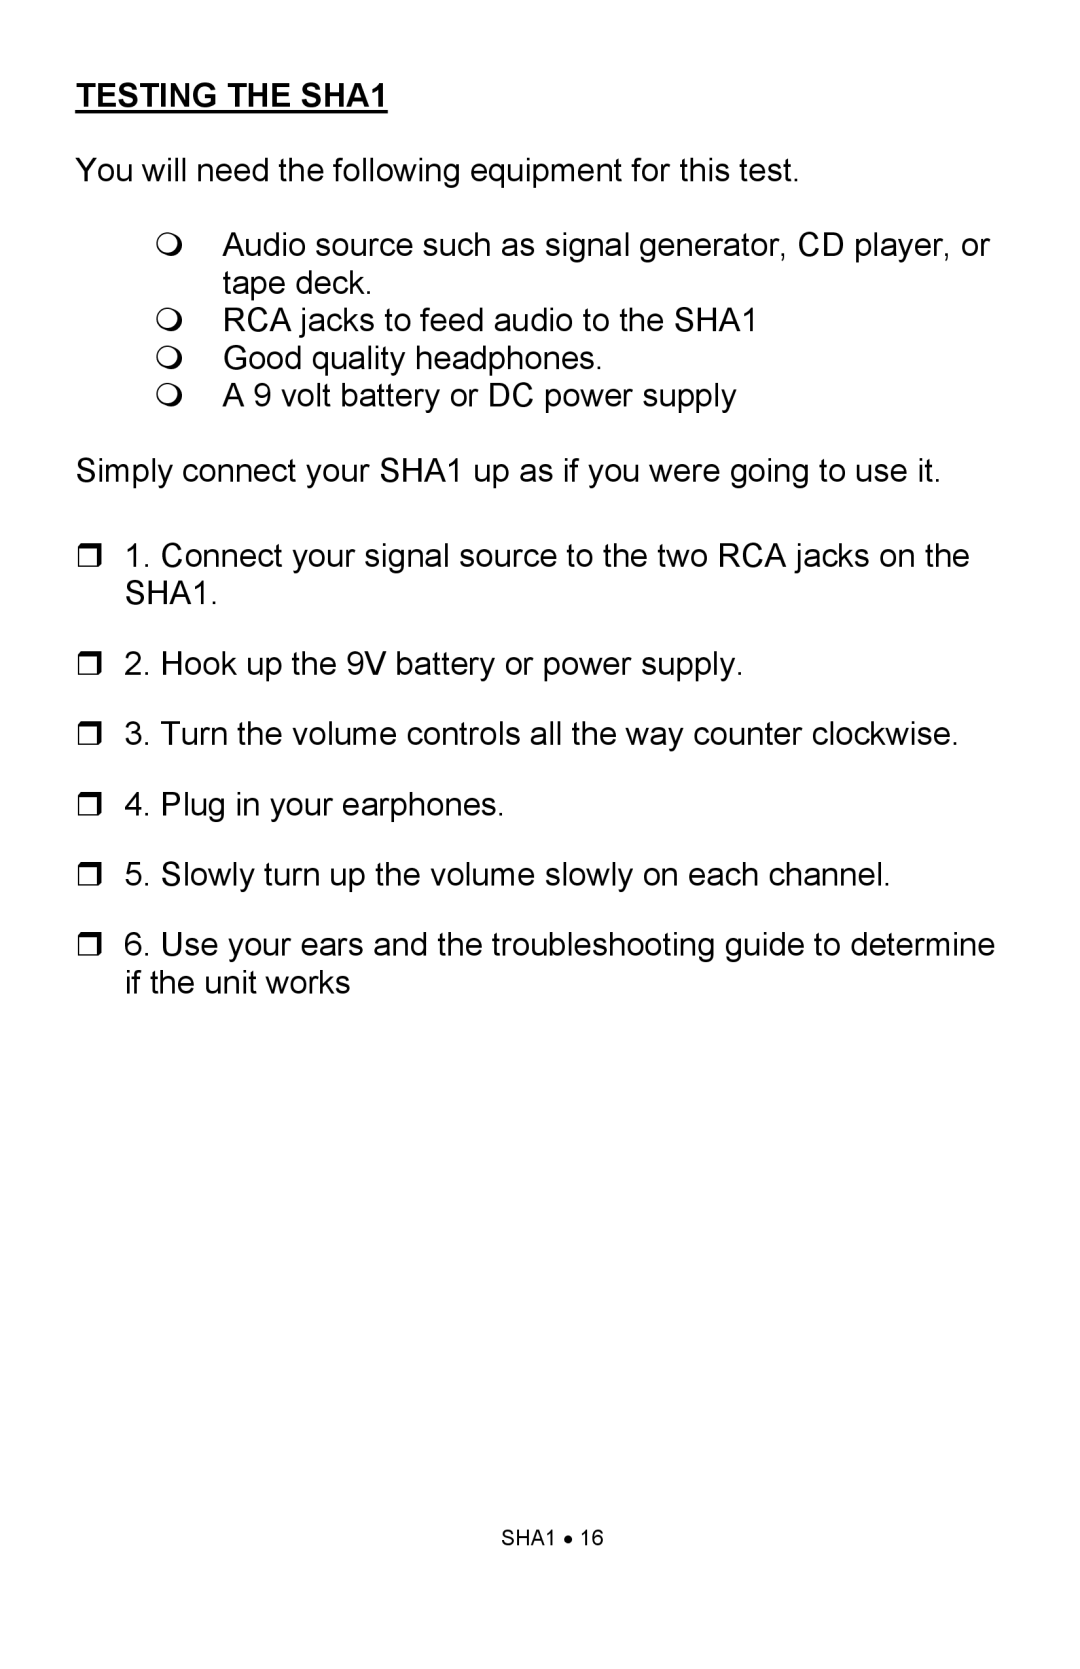 Ramsey Electronics manual TESTING THE SHA1 